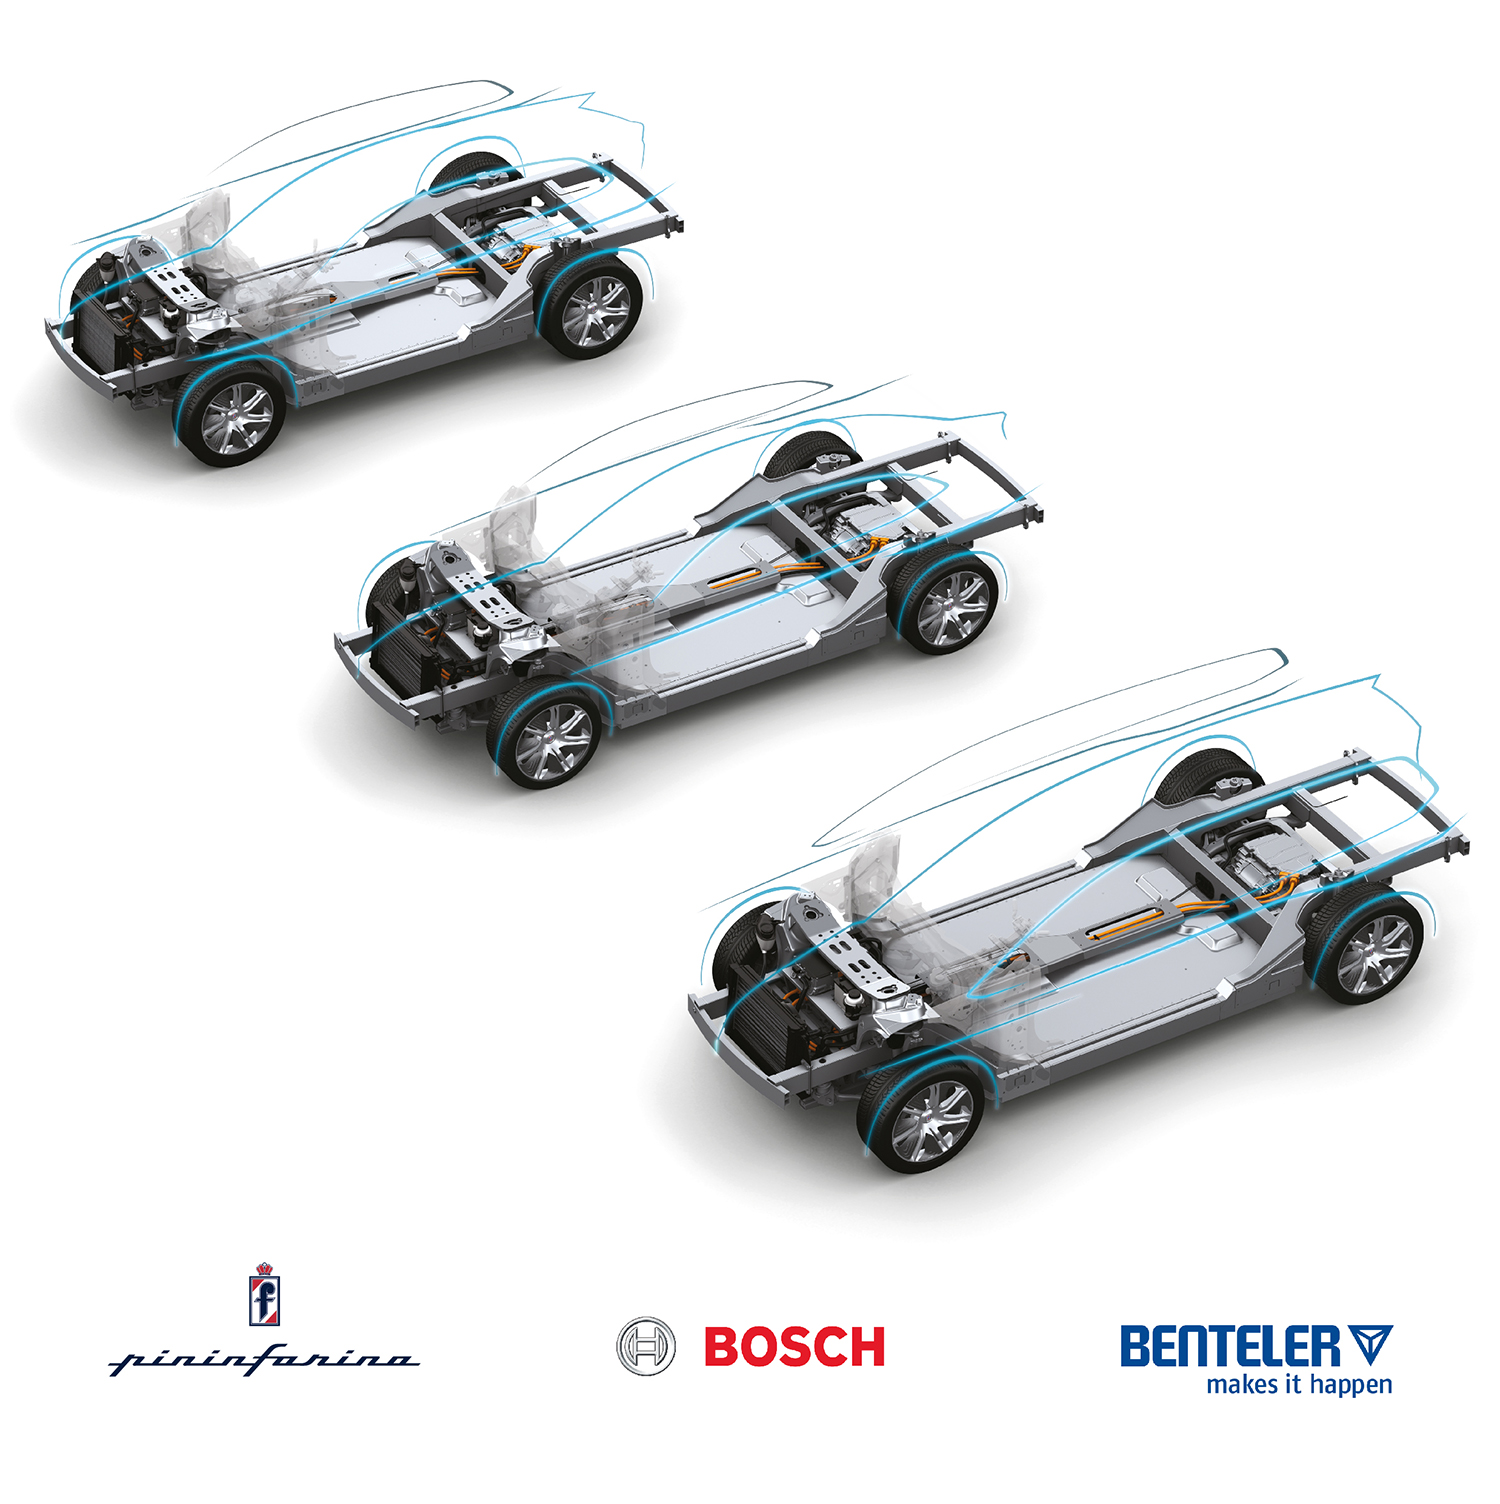 Benteler, Bosch, Pininfarina-Rolling Chassis